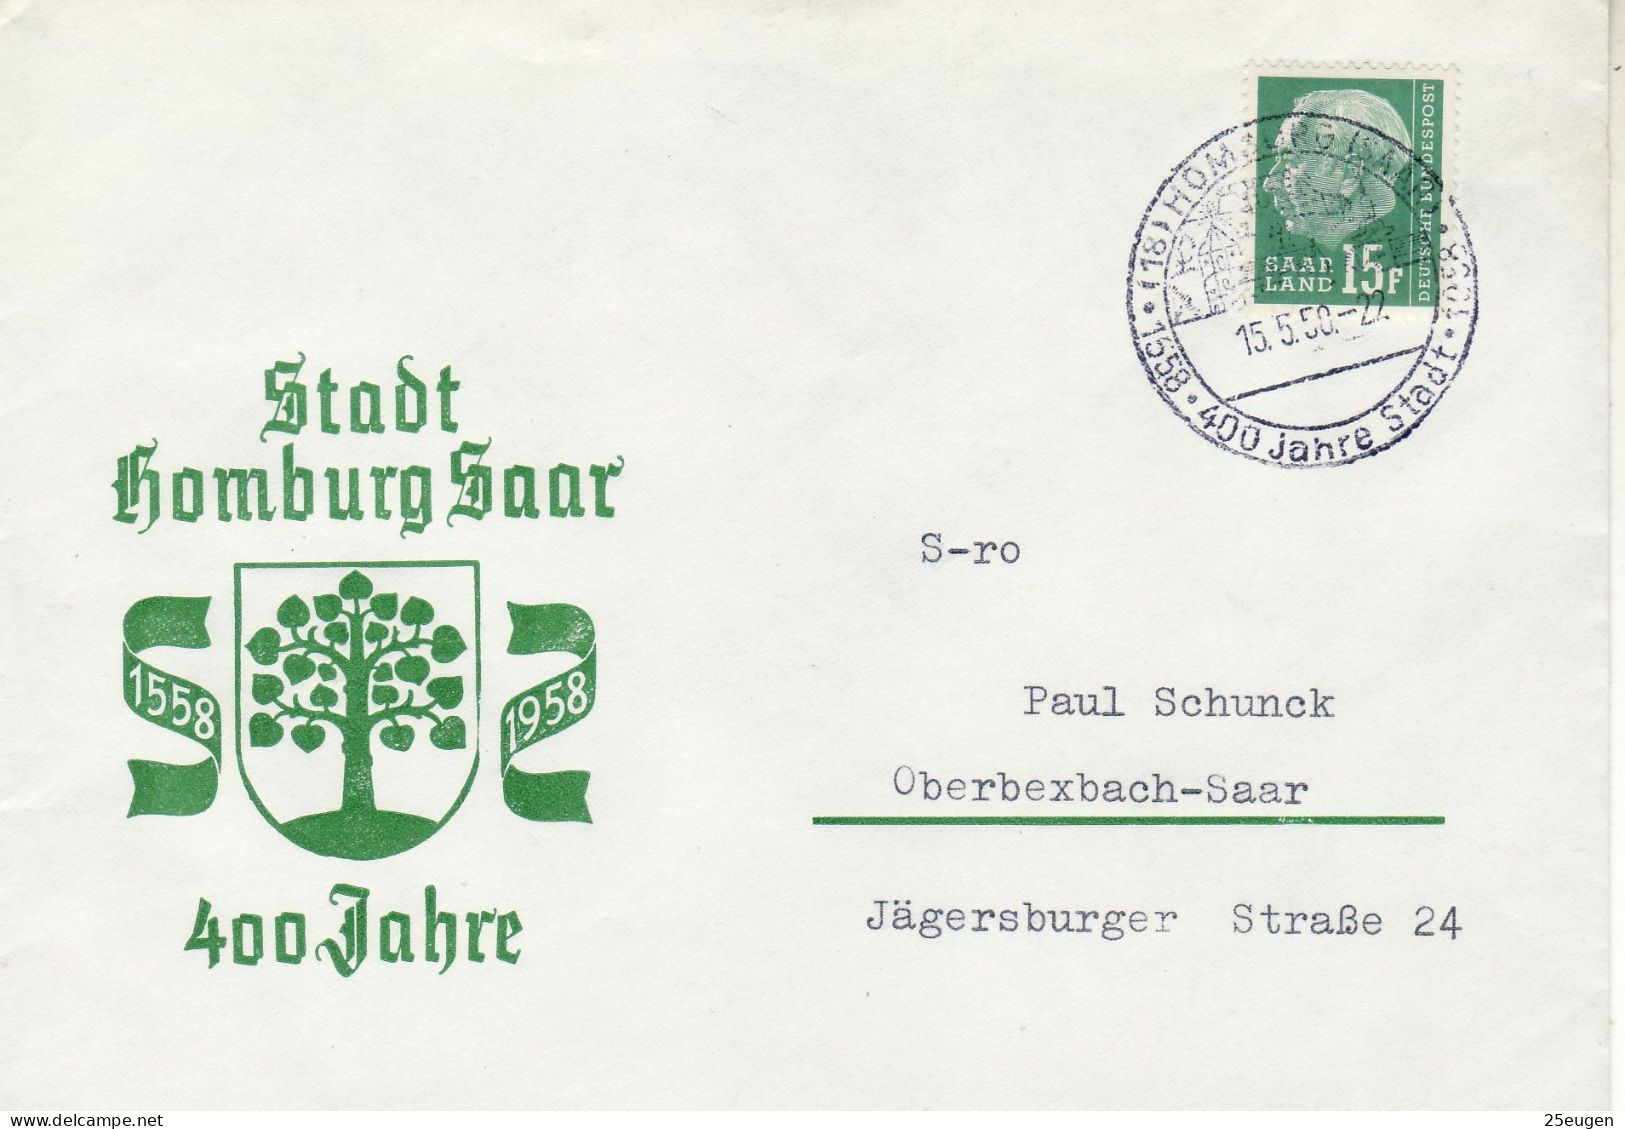 SAAR 1958  LETTER SENT FROM HOMBURG TO OBERBEXBACH - Briefe U. Dokumente